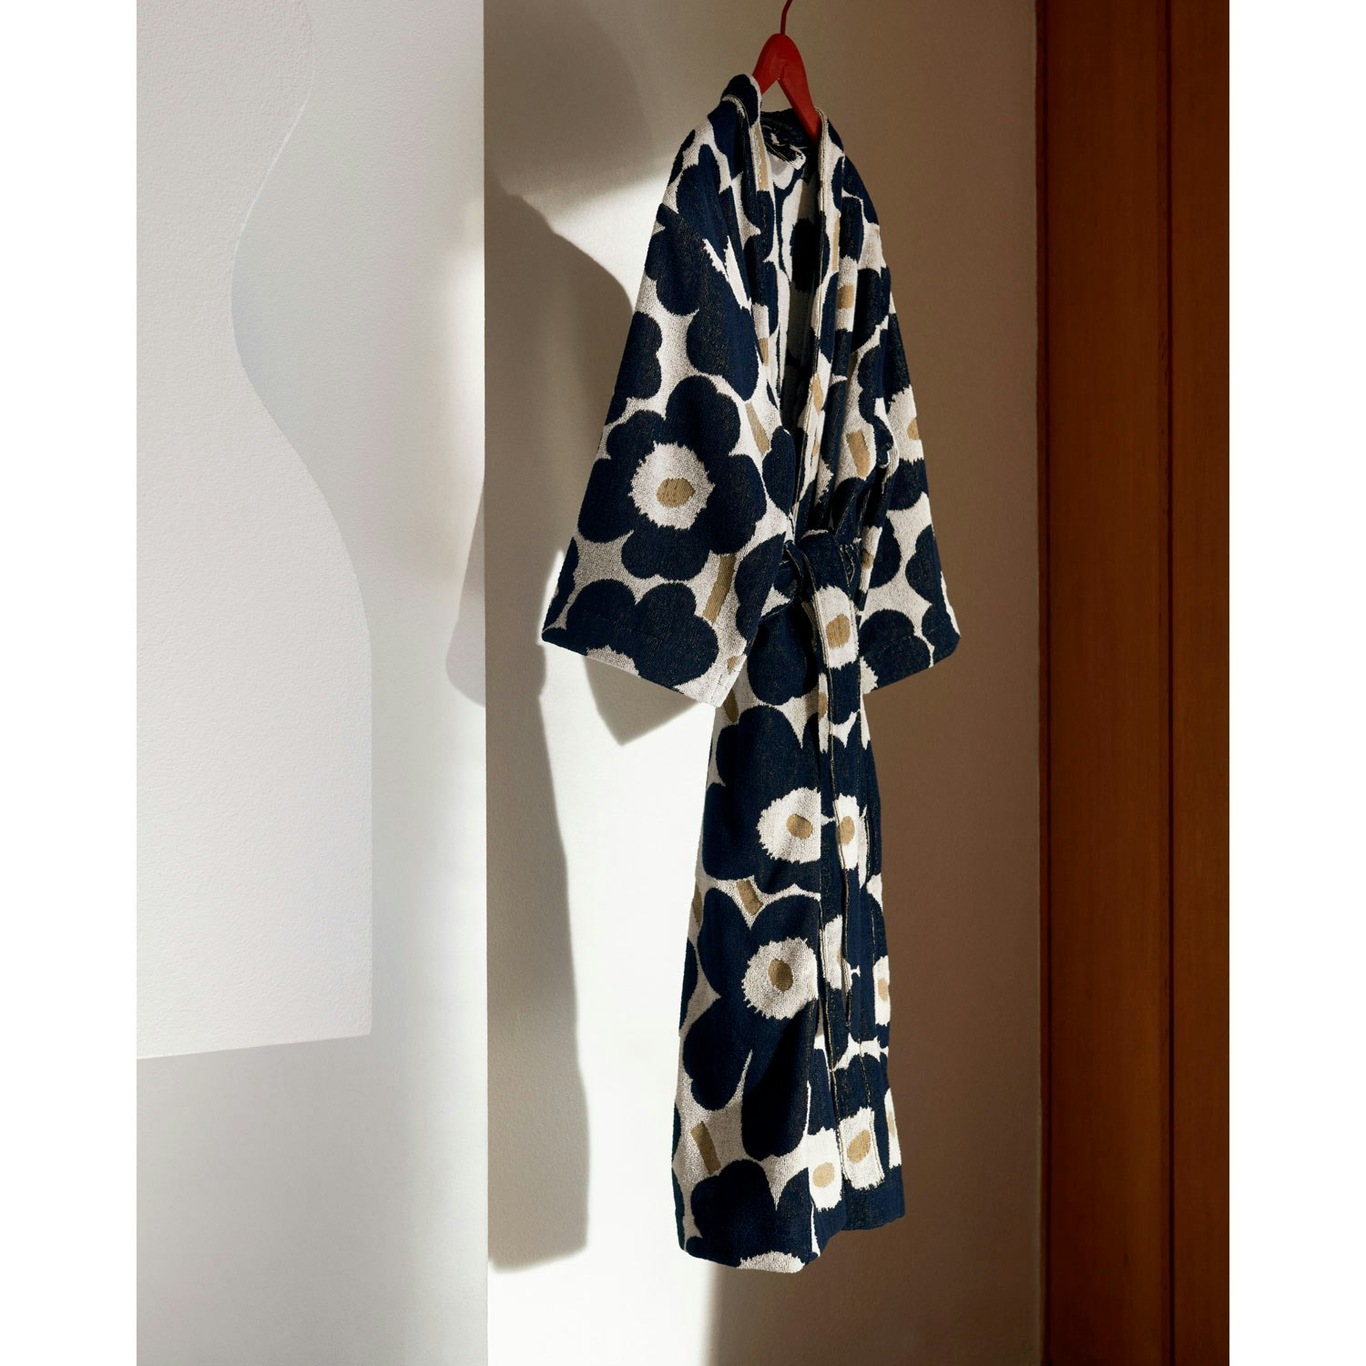 https://royaldesign.com/image/11/marimekko-pieni-unikko-bathrobe-off-white-gold-dark-blue-0?w=800&quality=80